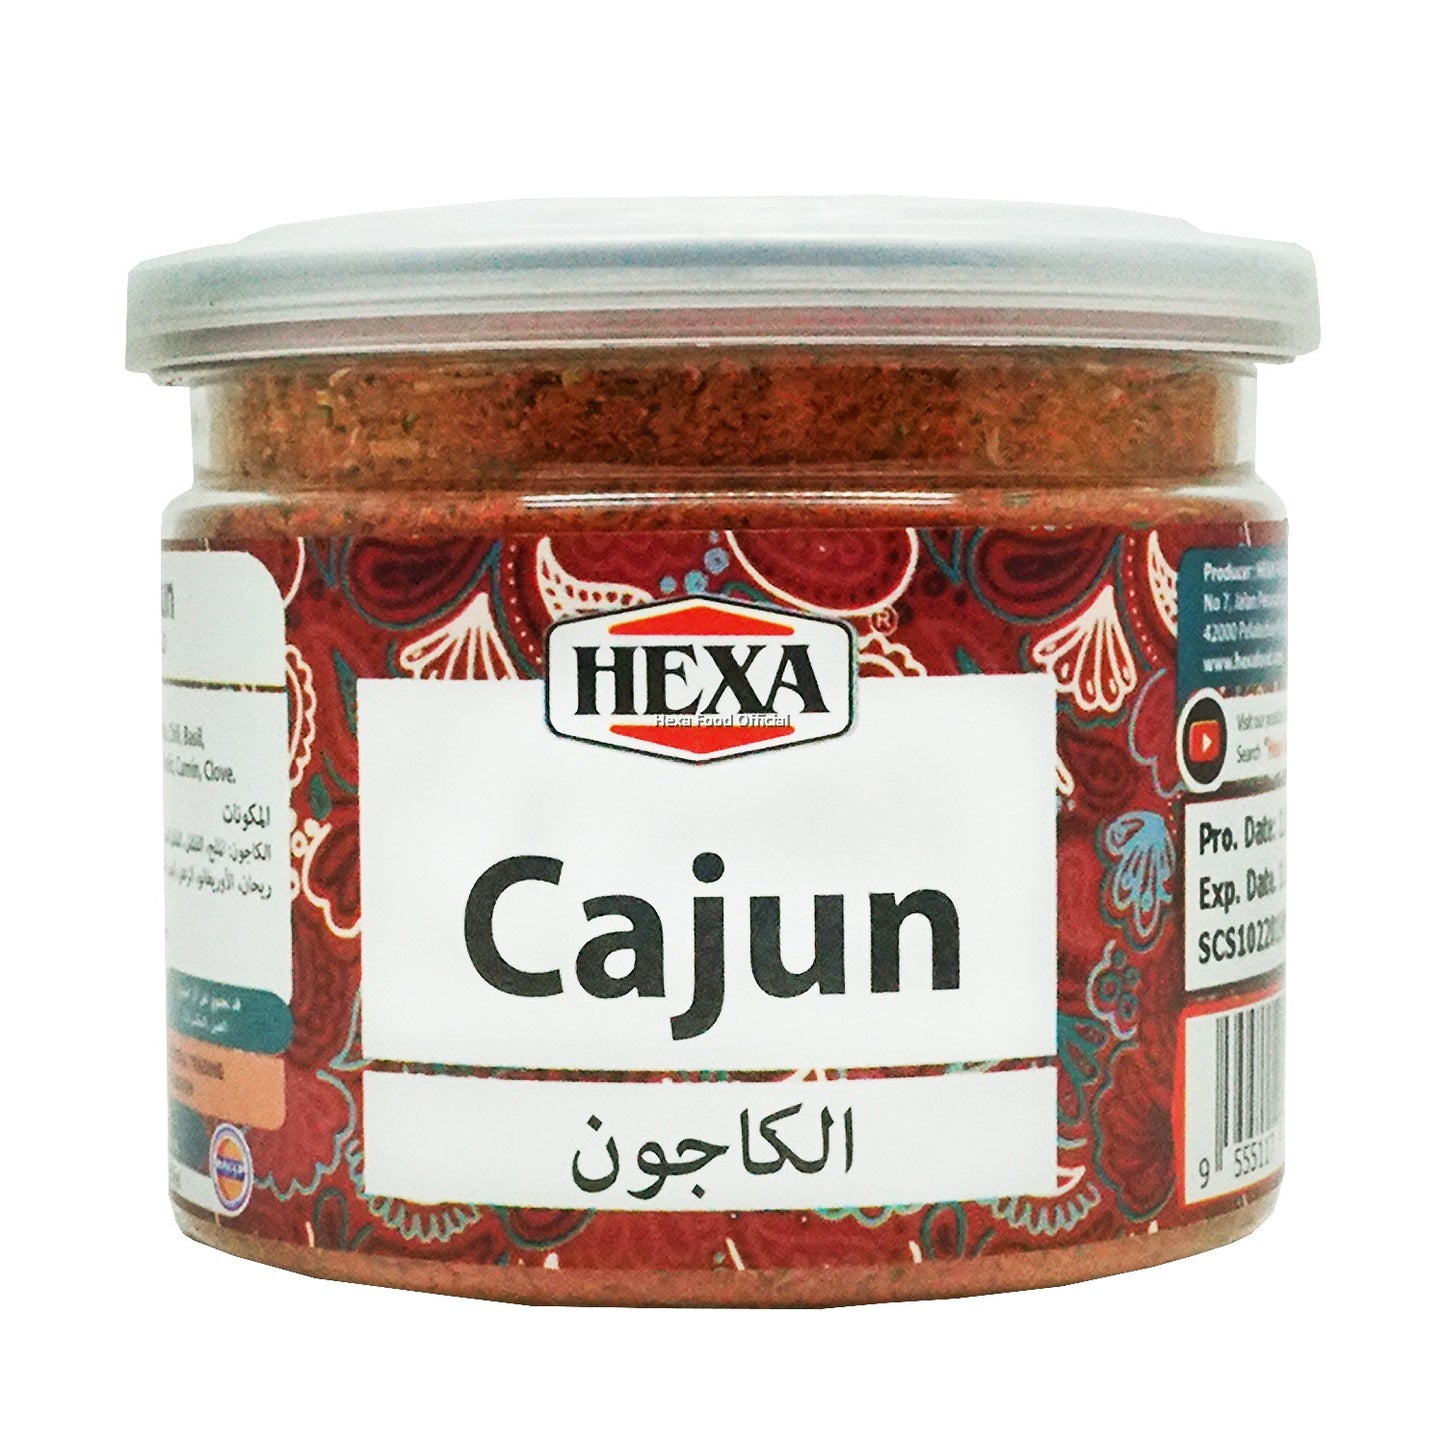 HEXA HALAL Cajun Spice 85gm + Salted Egg Sauce Premix 140gm